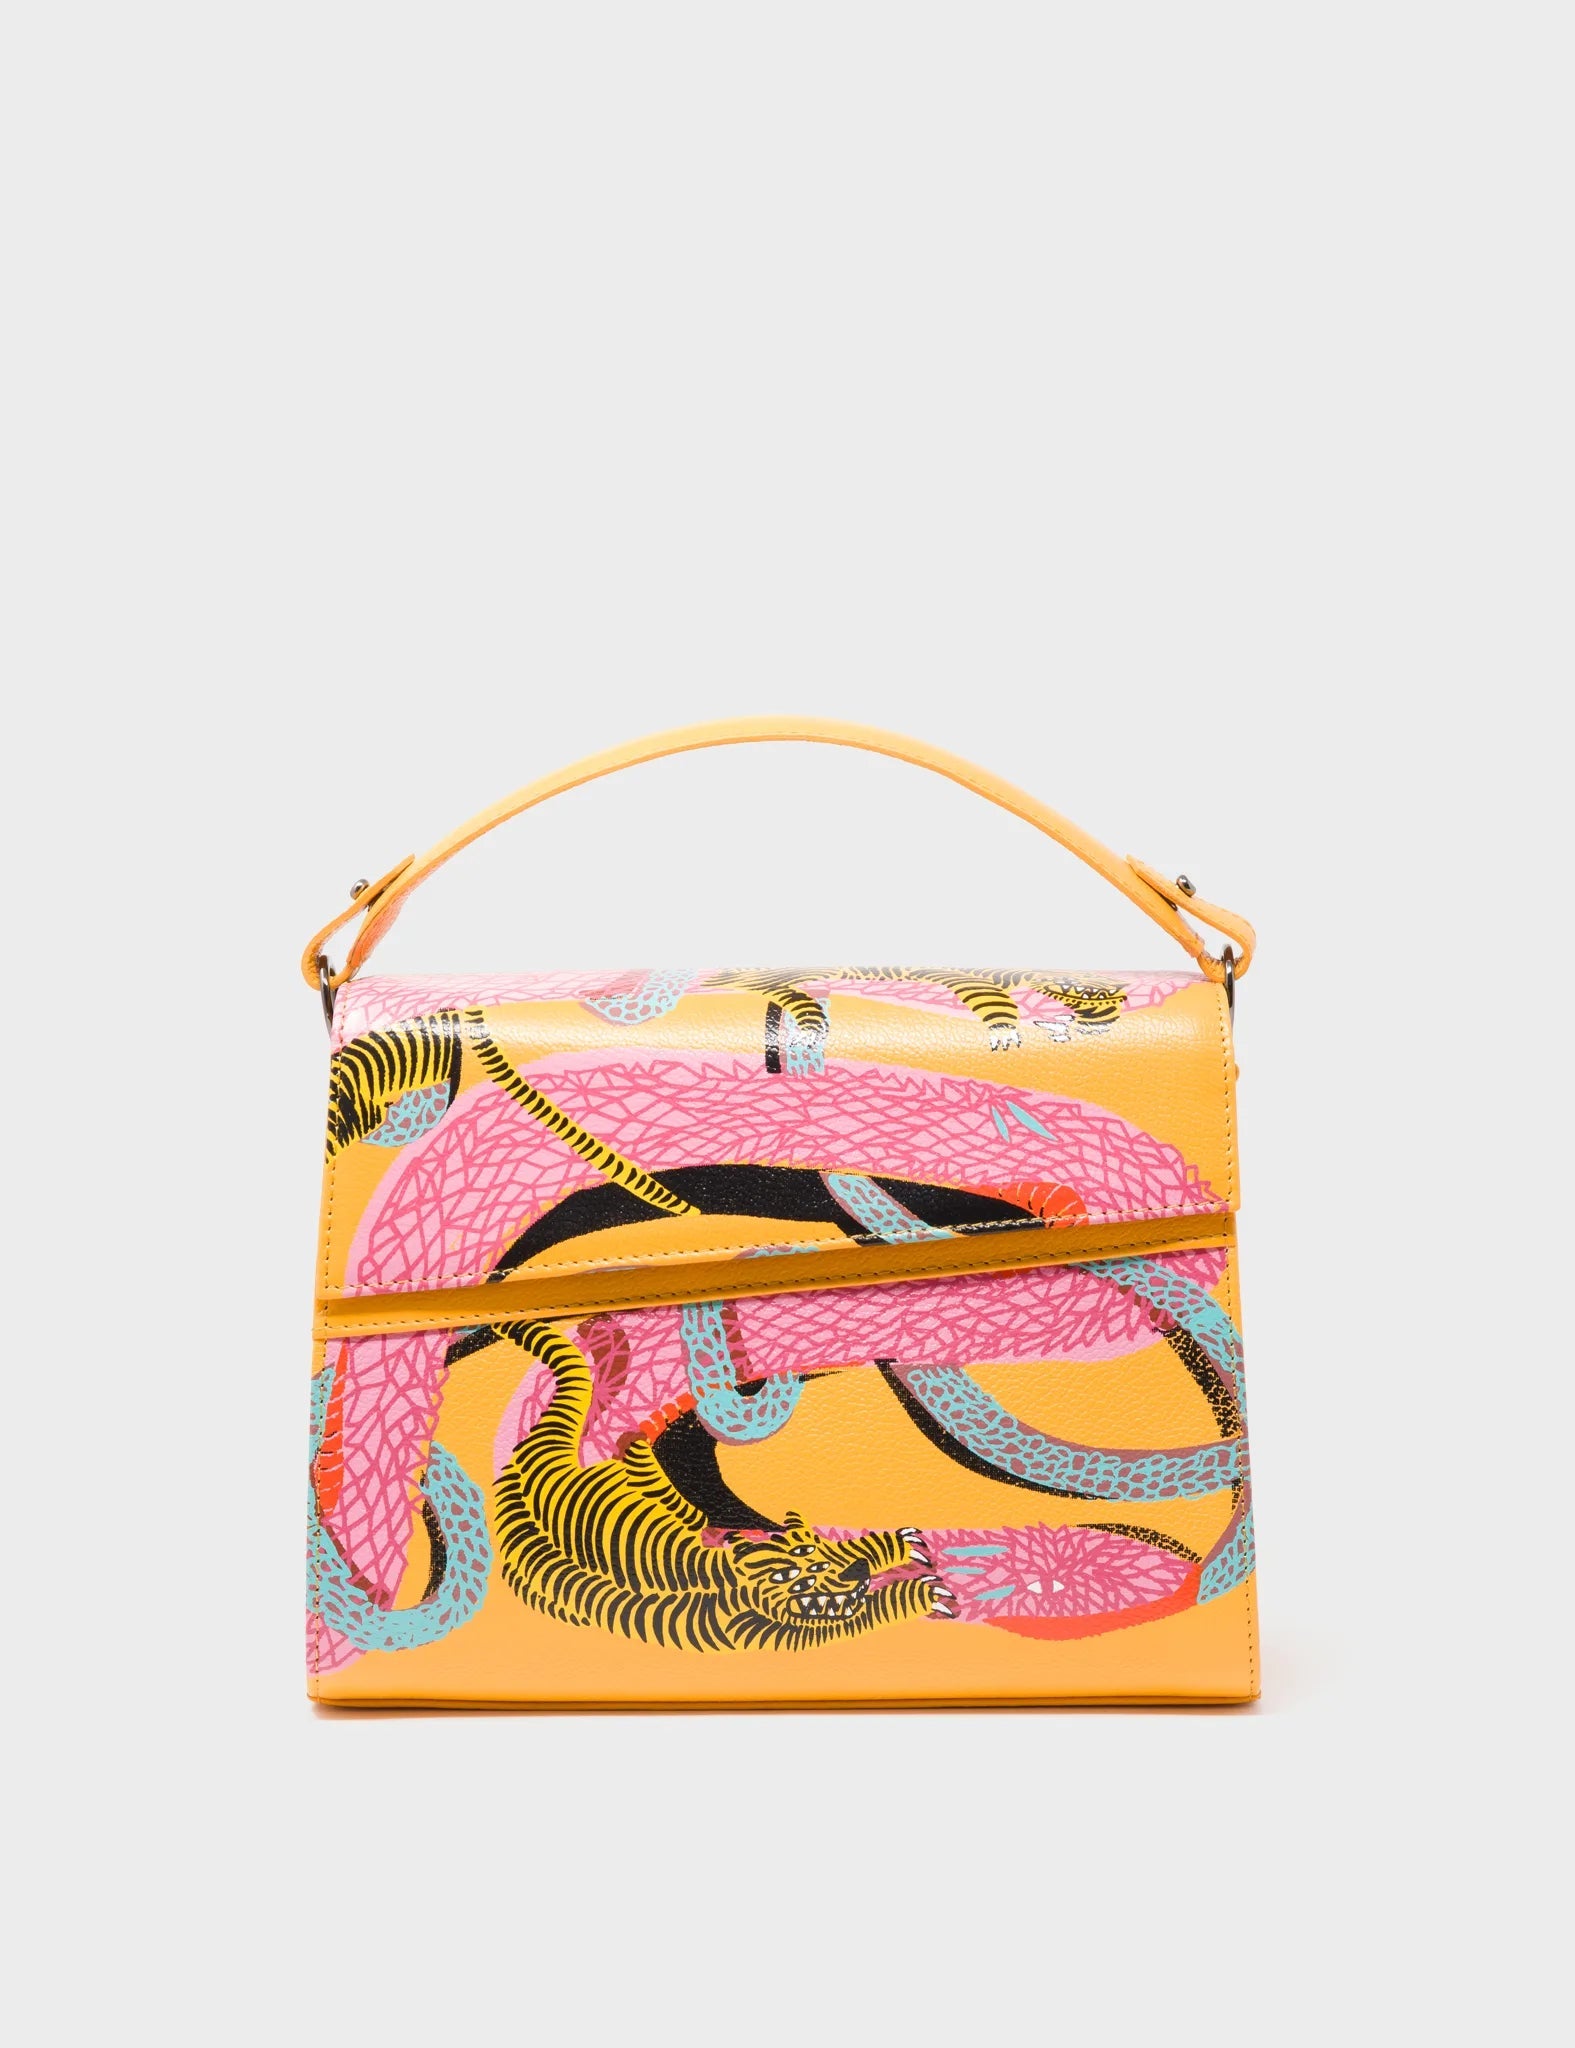 Bag Medium Crossbody Handbag Marigold Leather - Tangle Tiger and Snake Print - Front